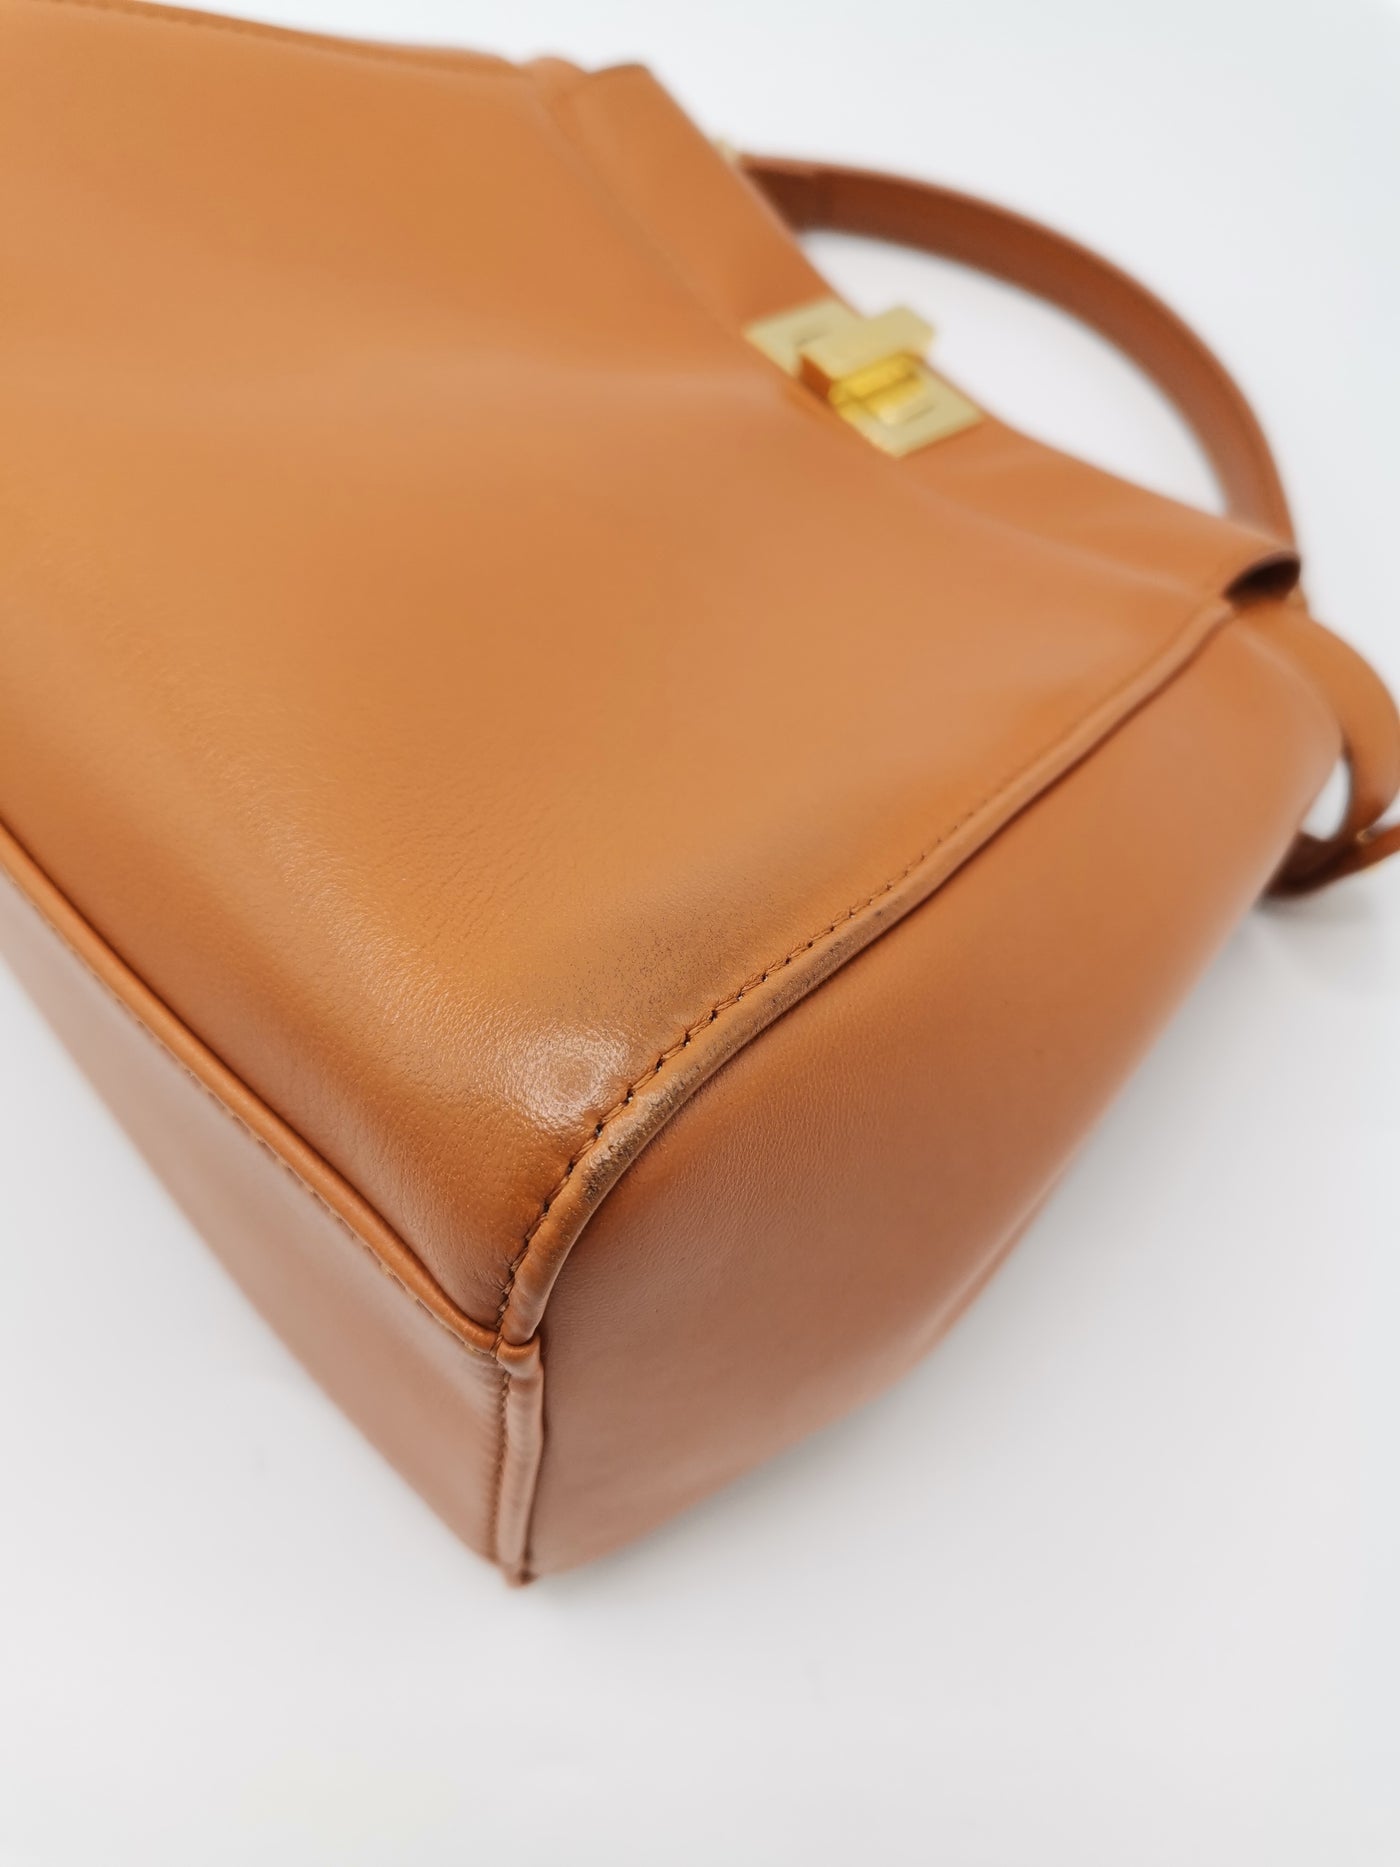 FENDI mini Peekaboo bag with long strap and rain cover RRP £2950